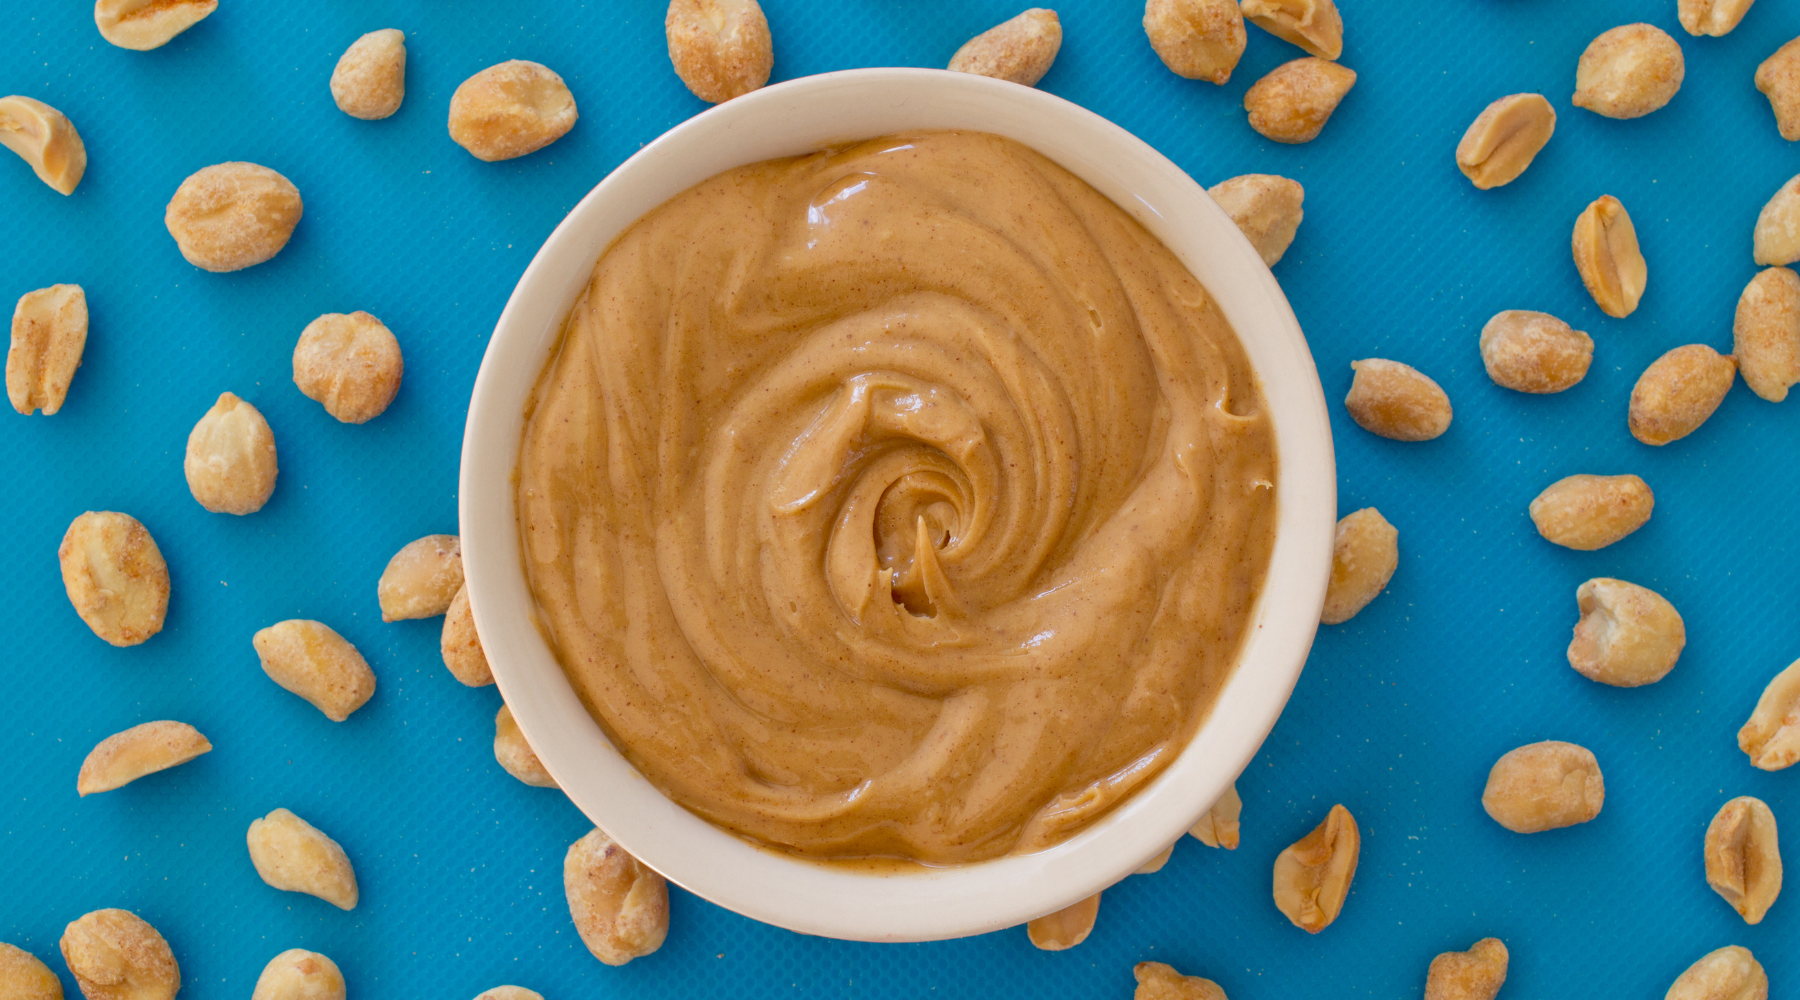 peanut butter uses - Alpino Peanut Butter